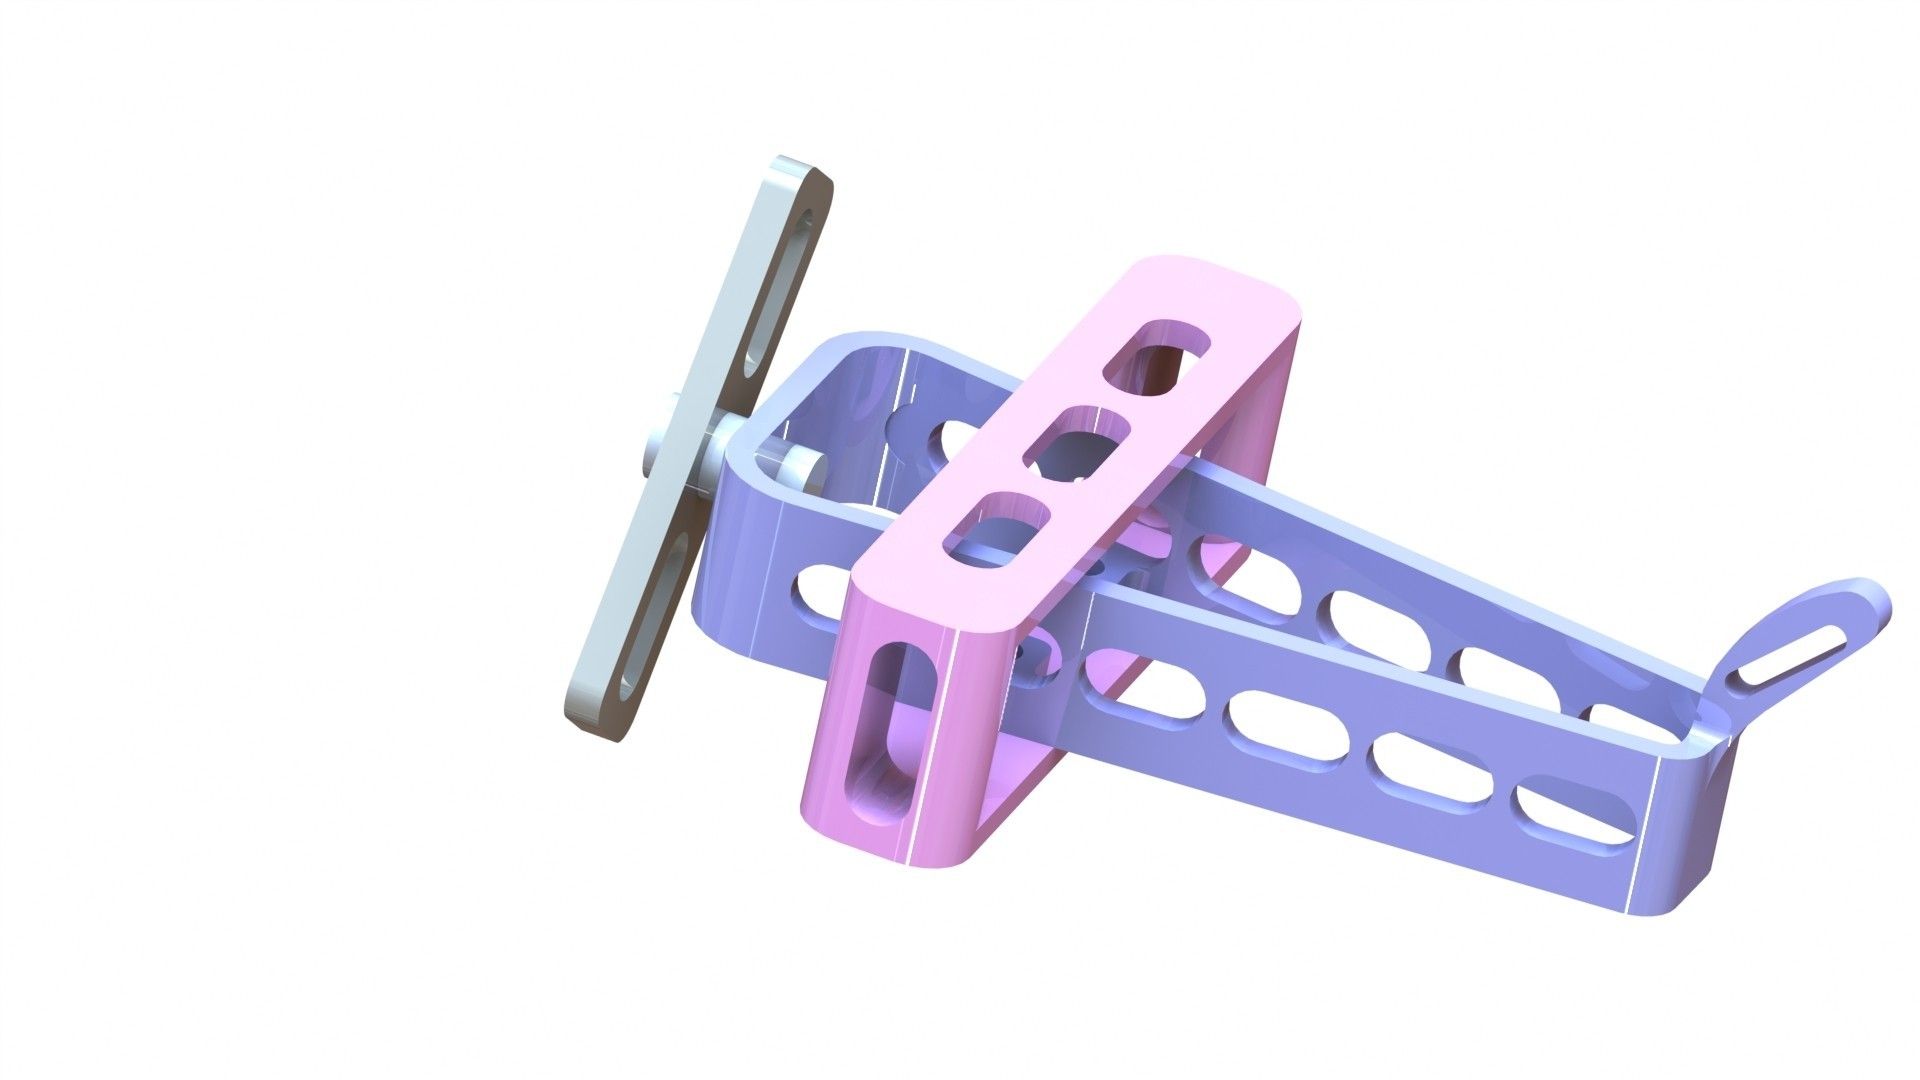 Toy plane_1.JPG Download free STL file Toy Plane • 3D printing template, Brahmabeej